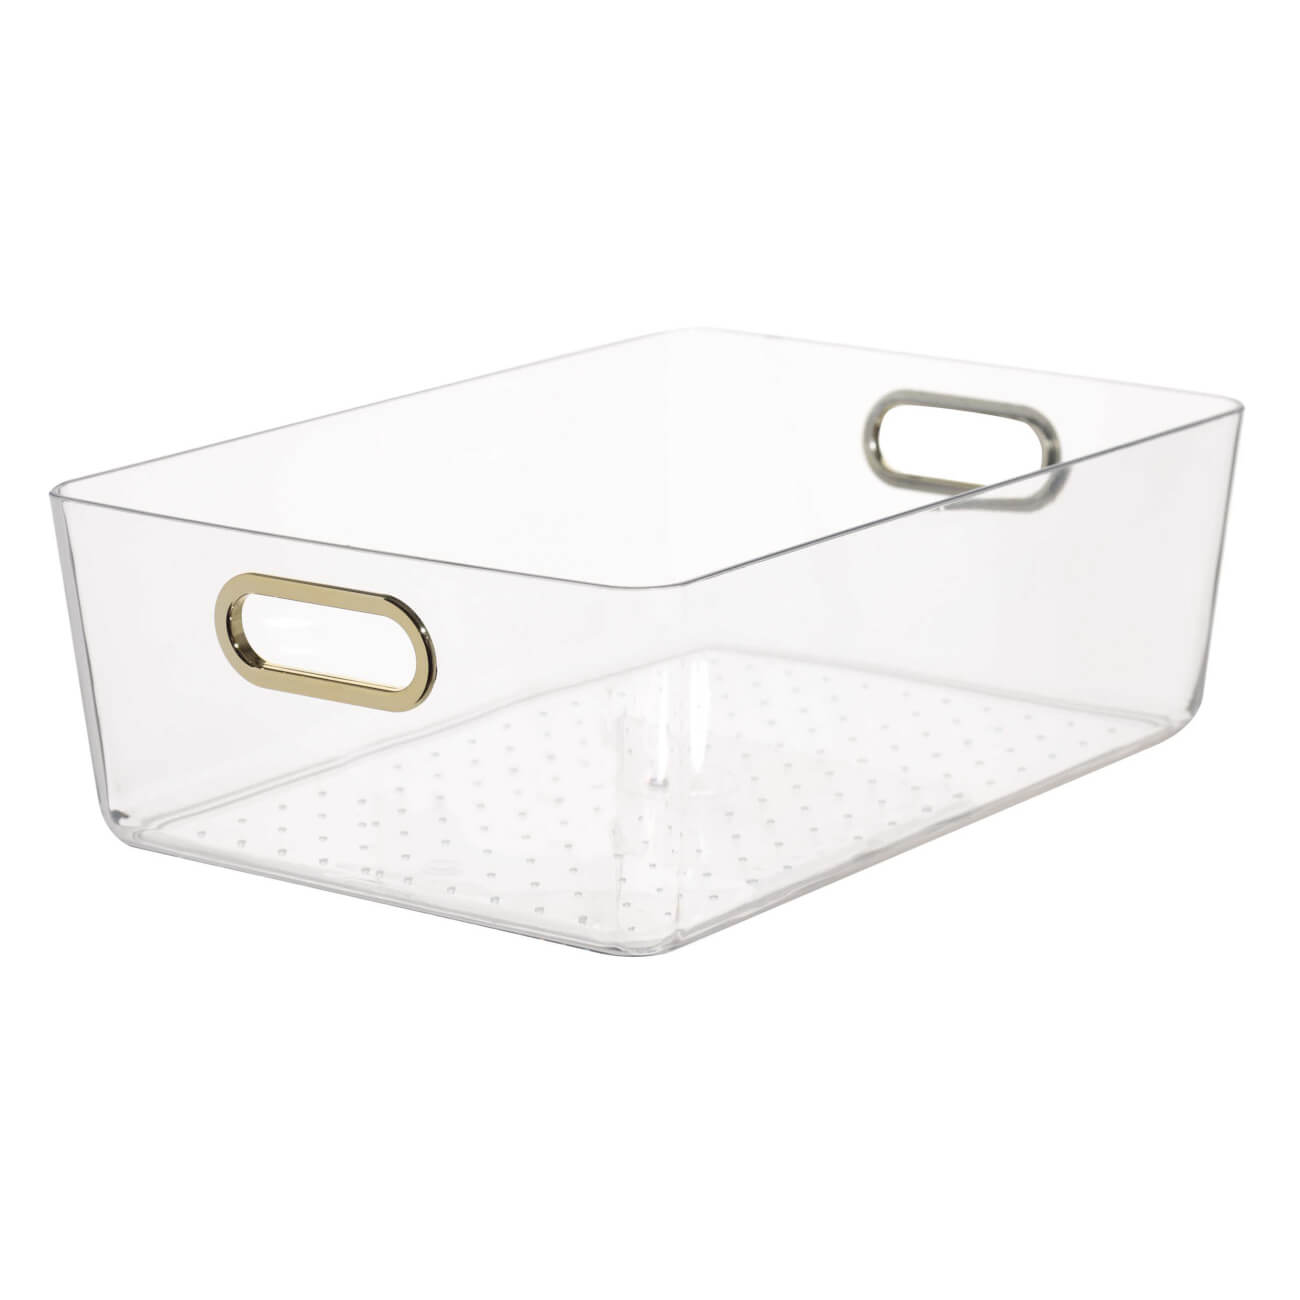 Organizer box, 29x20x10 cm, household, with golden handles, plastic, Order изображение № 1